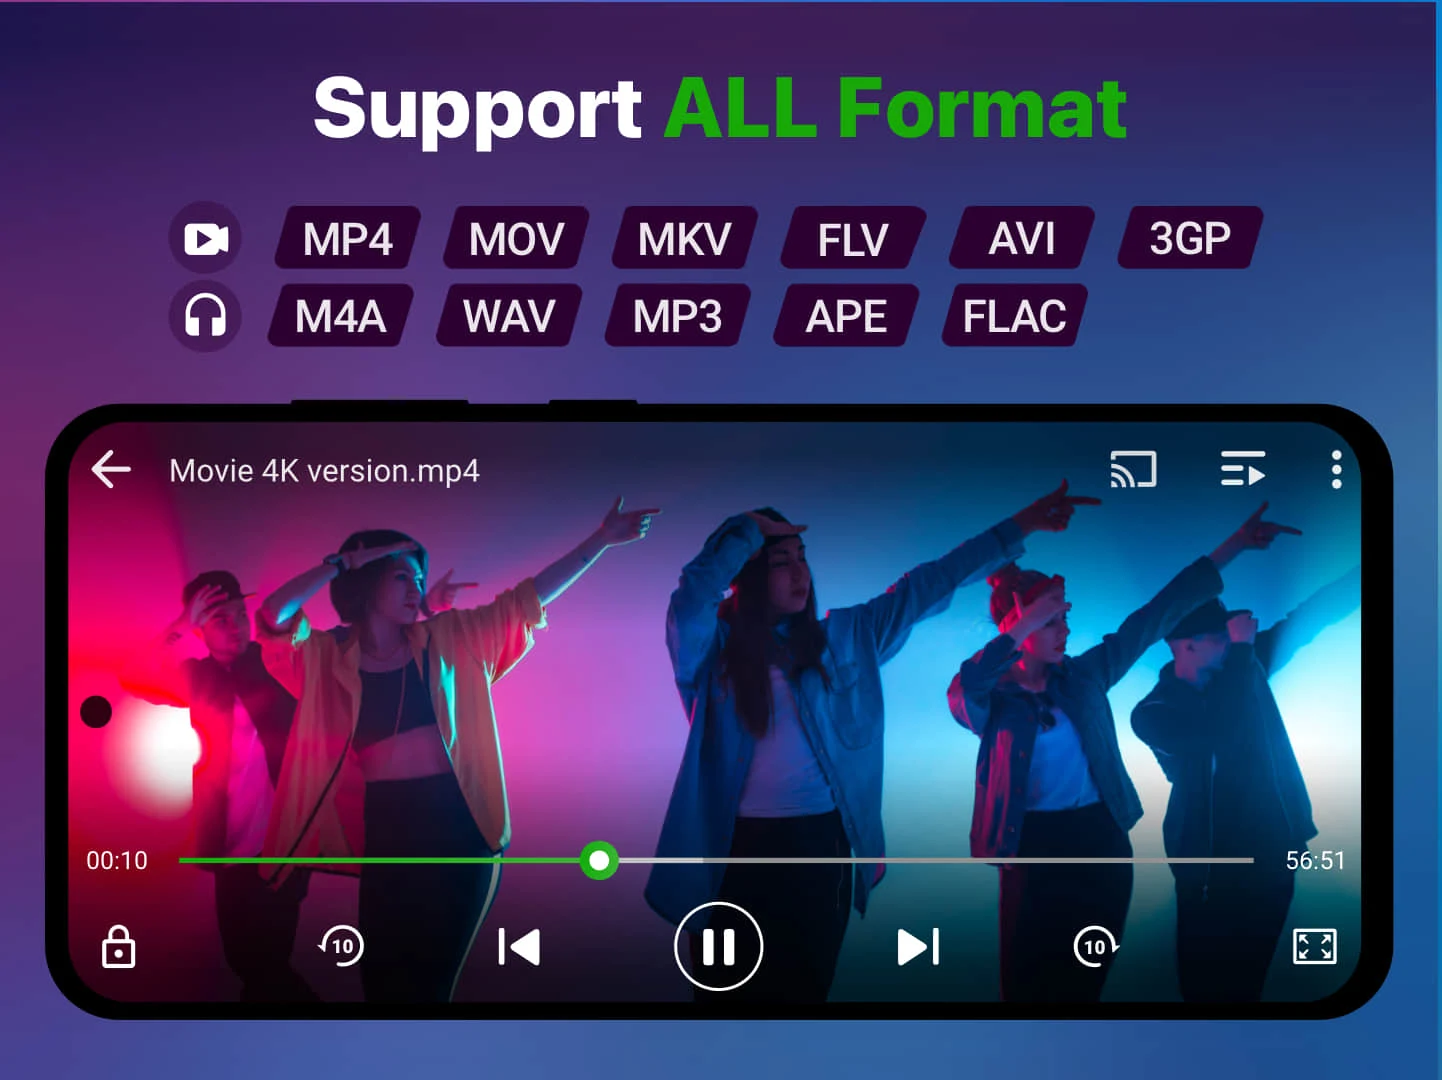 Video Player All Format MOD APK